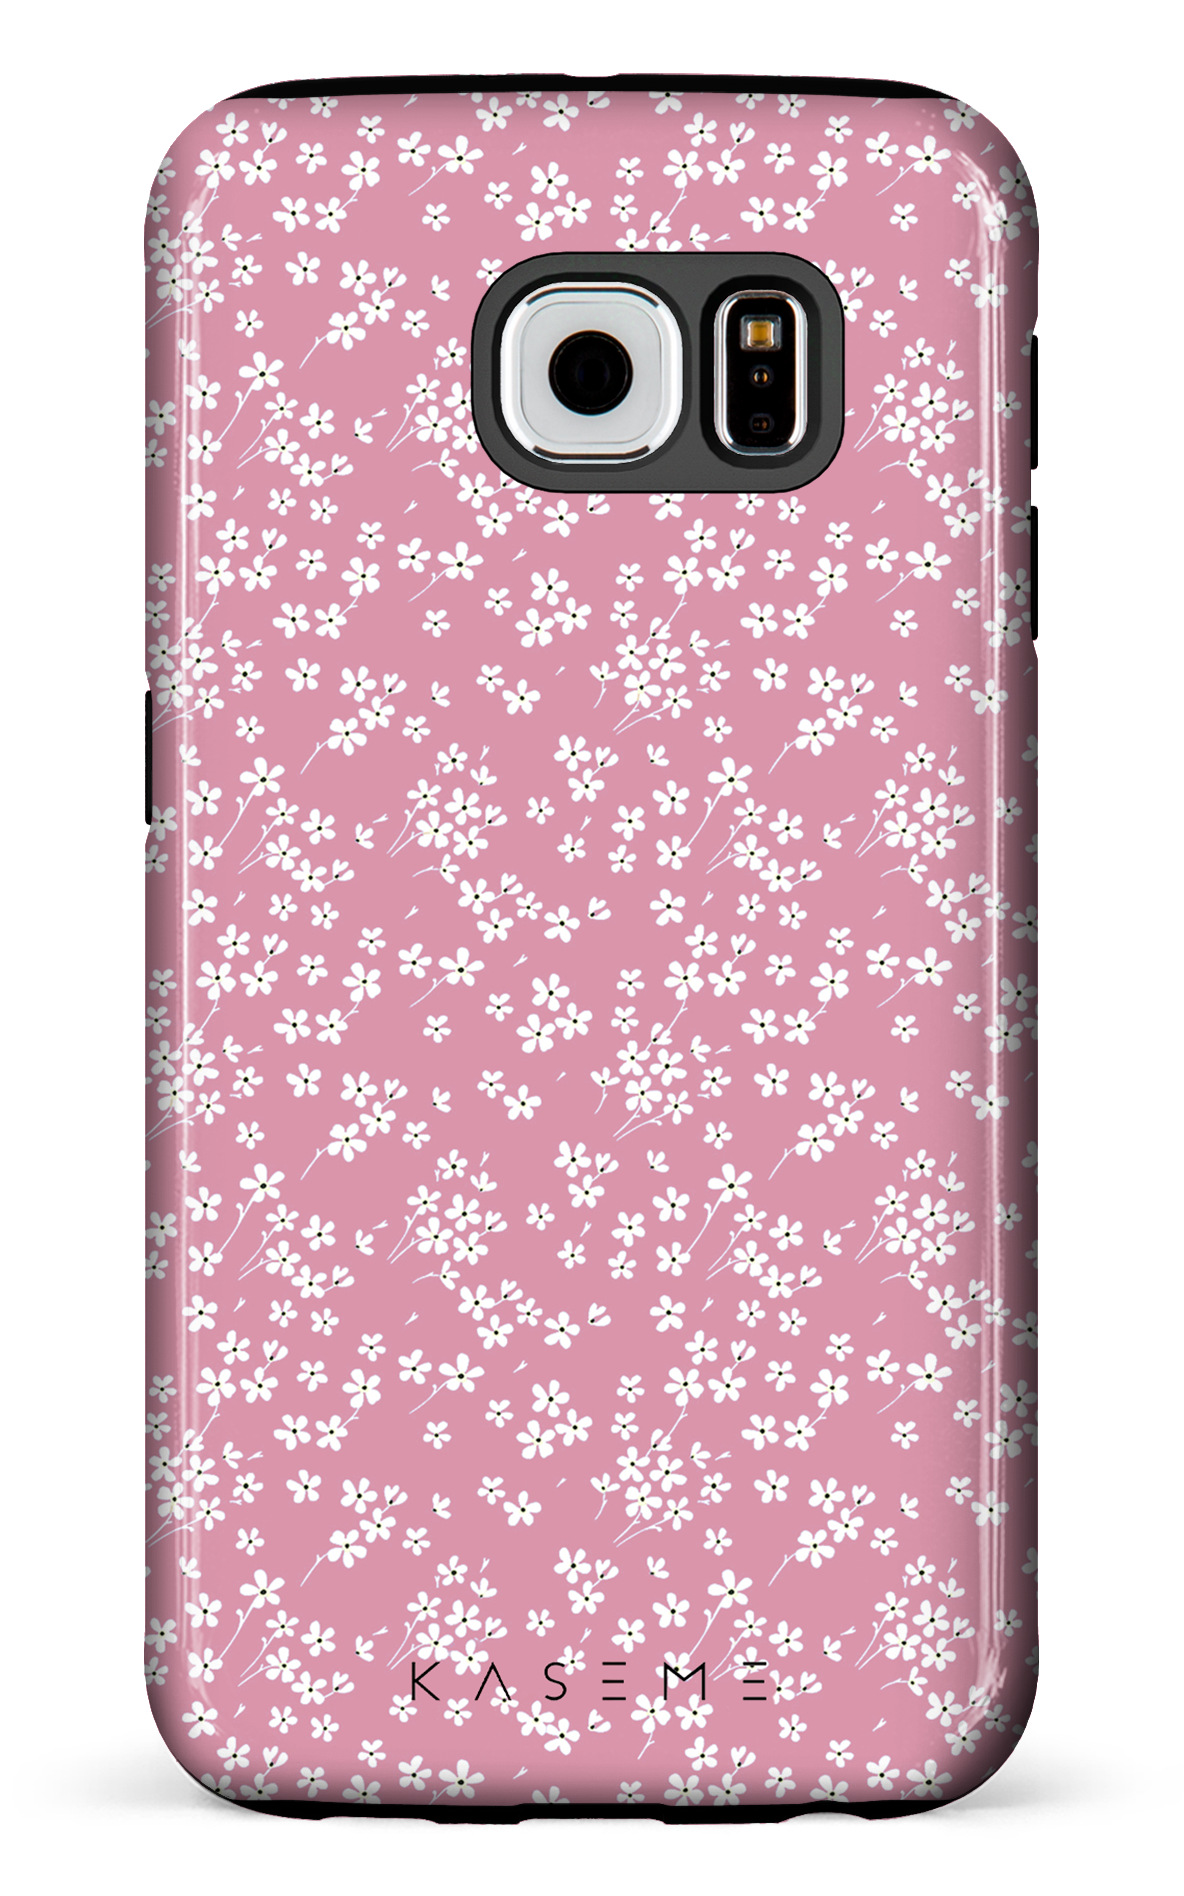 Posy pink - Galaxy S6